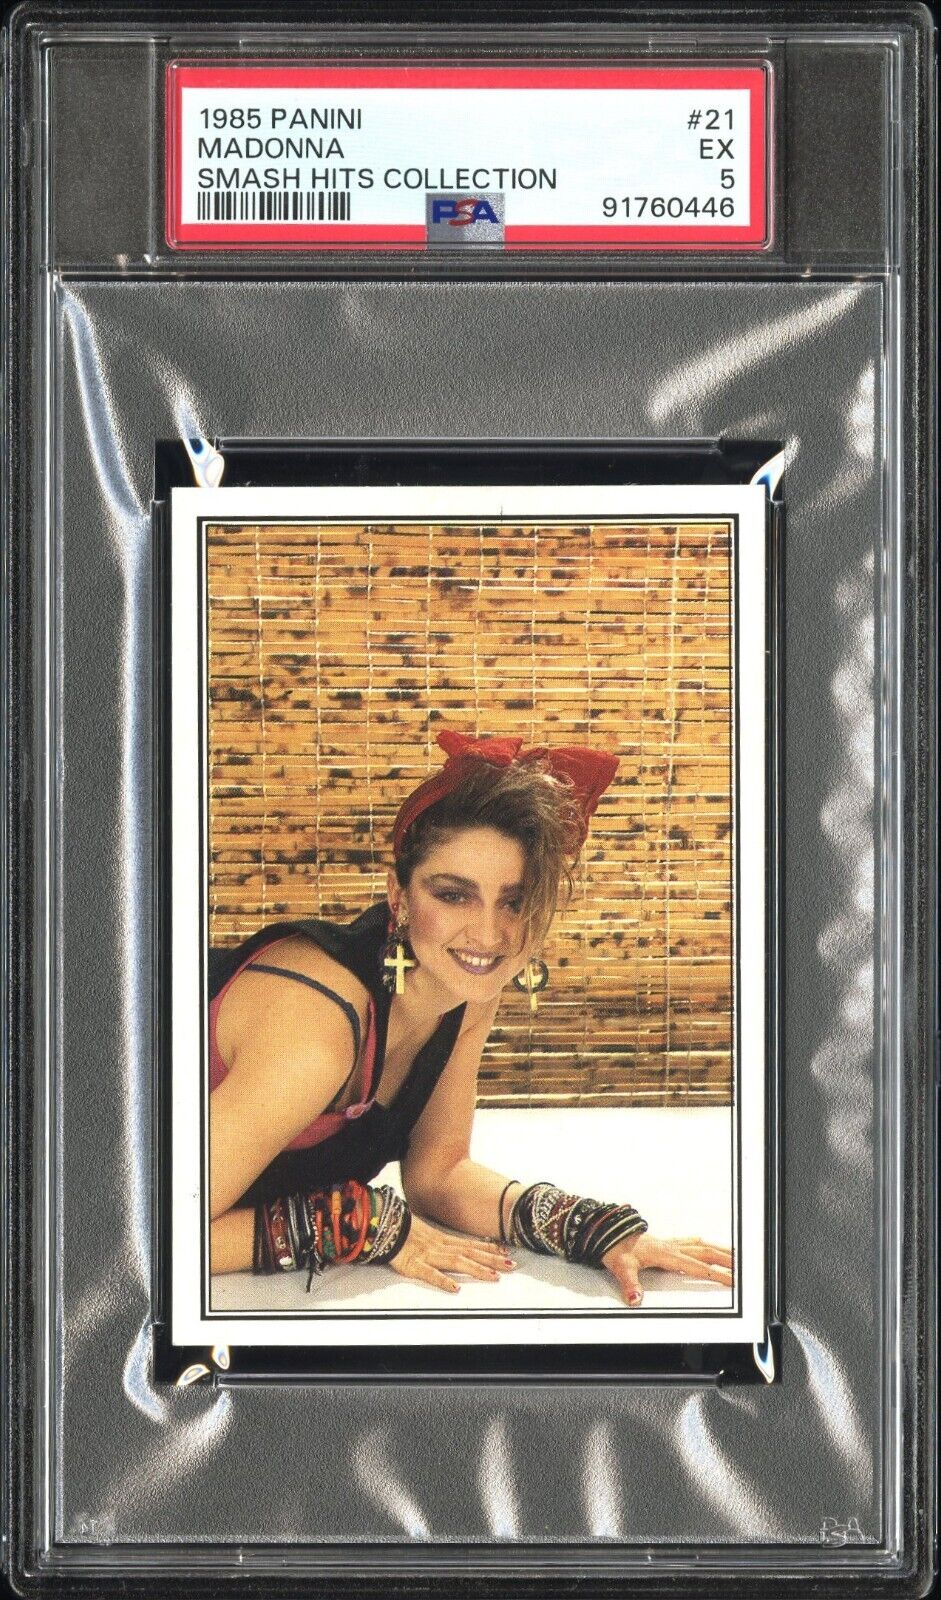 1985 Madonna Panini Smash Hits Collection #21 - PSA Graded 5 EX - BIGGER CASE RC